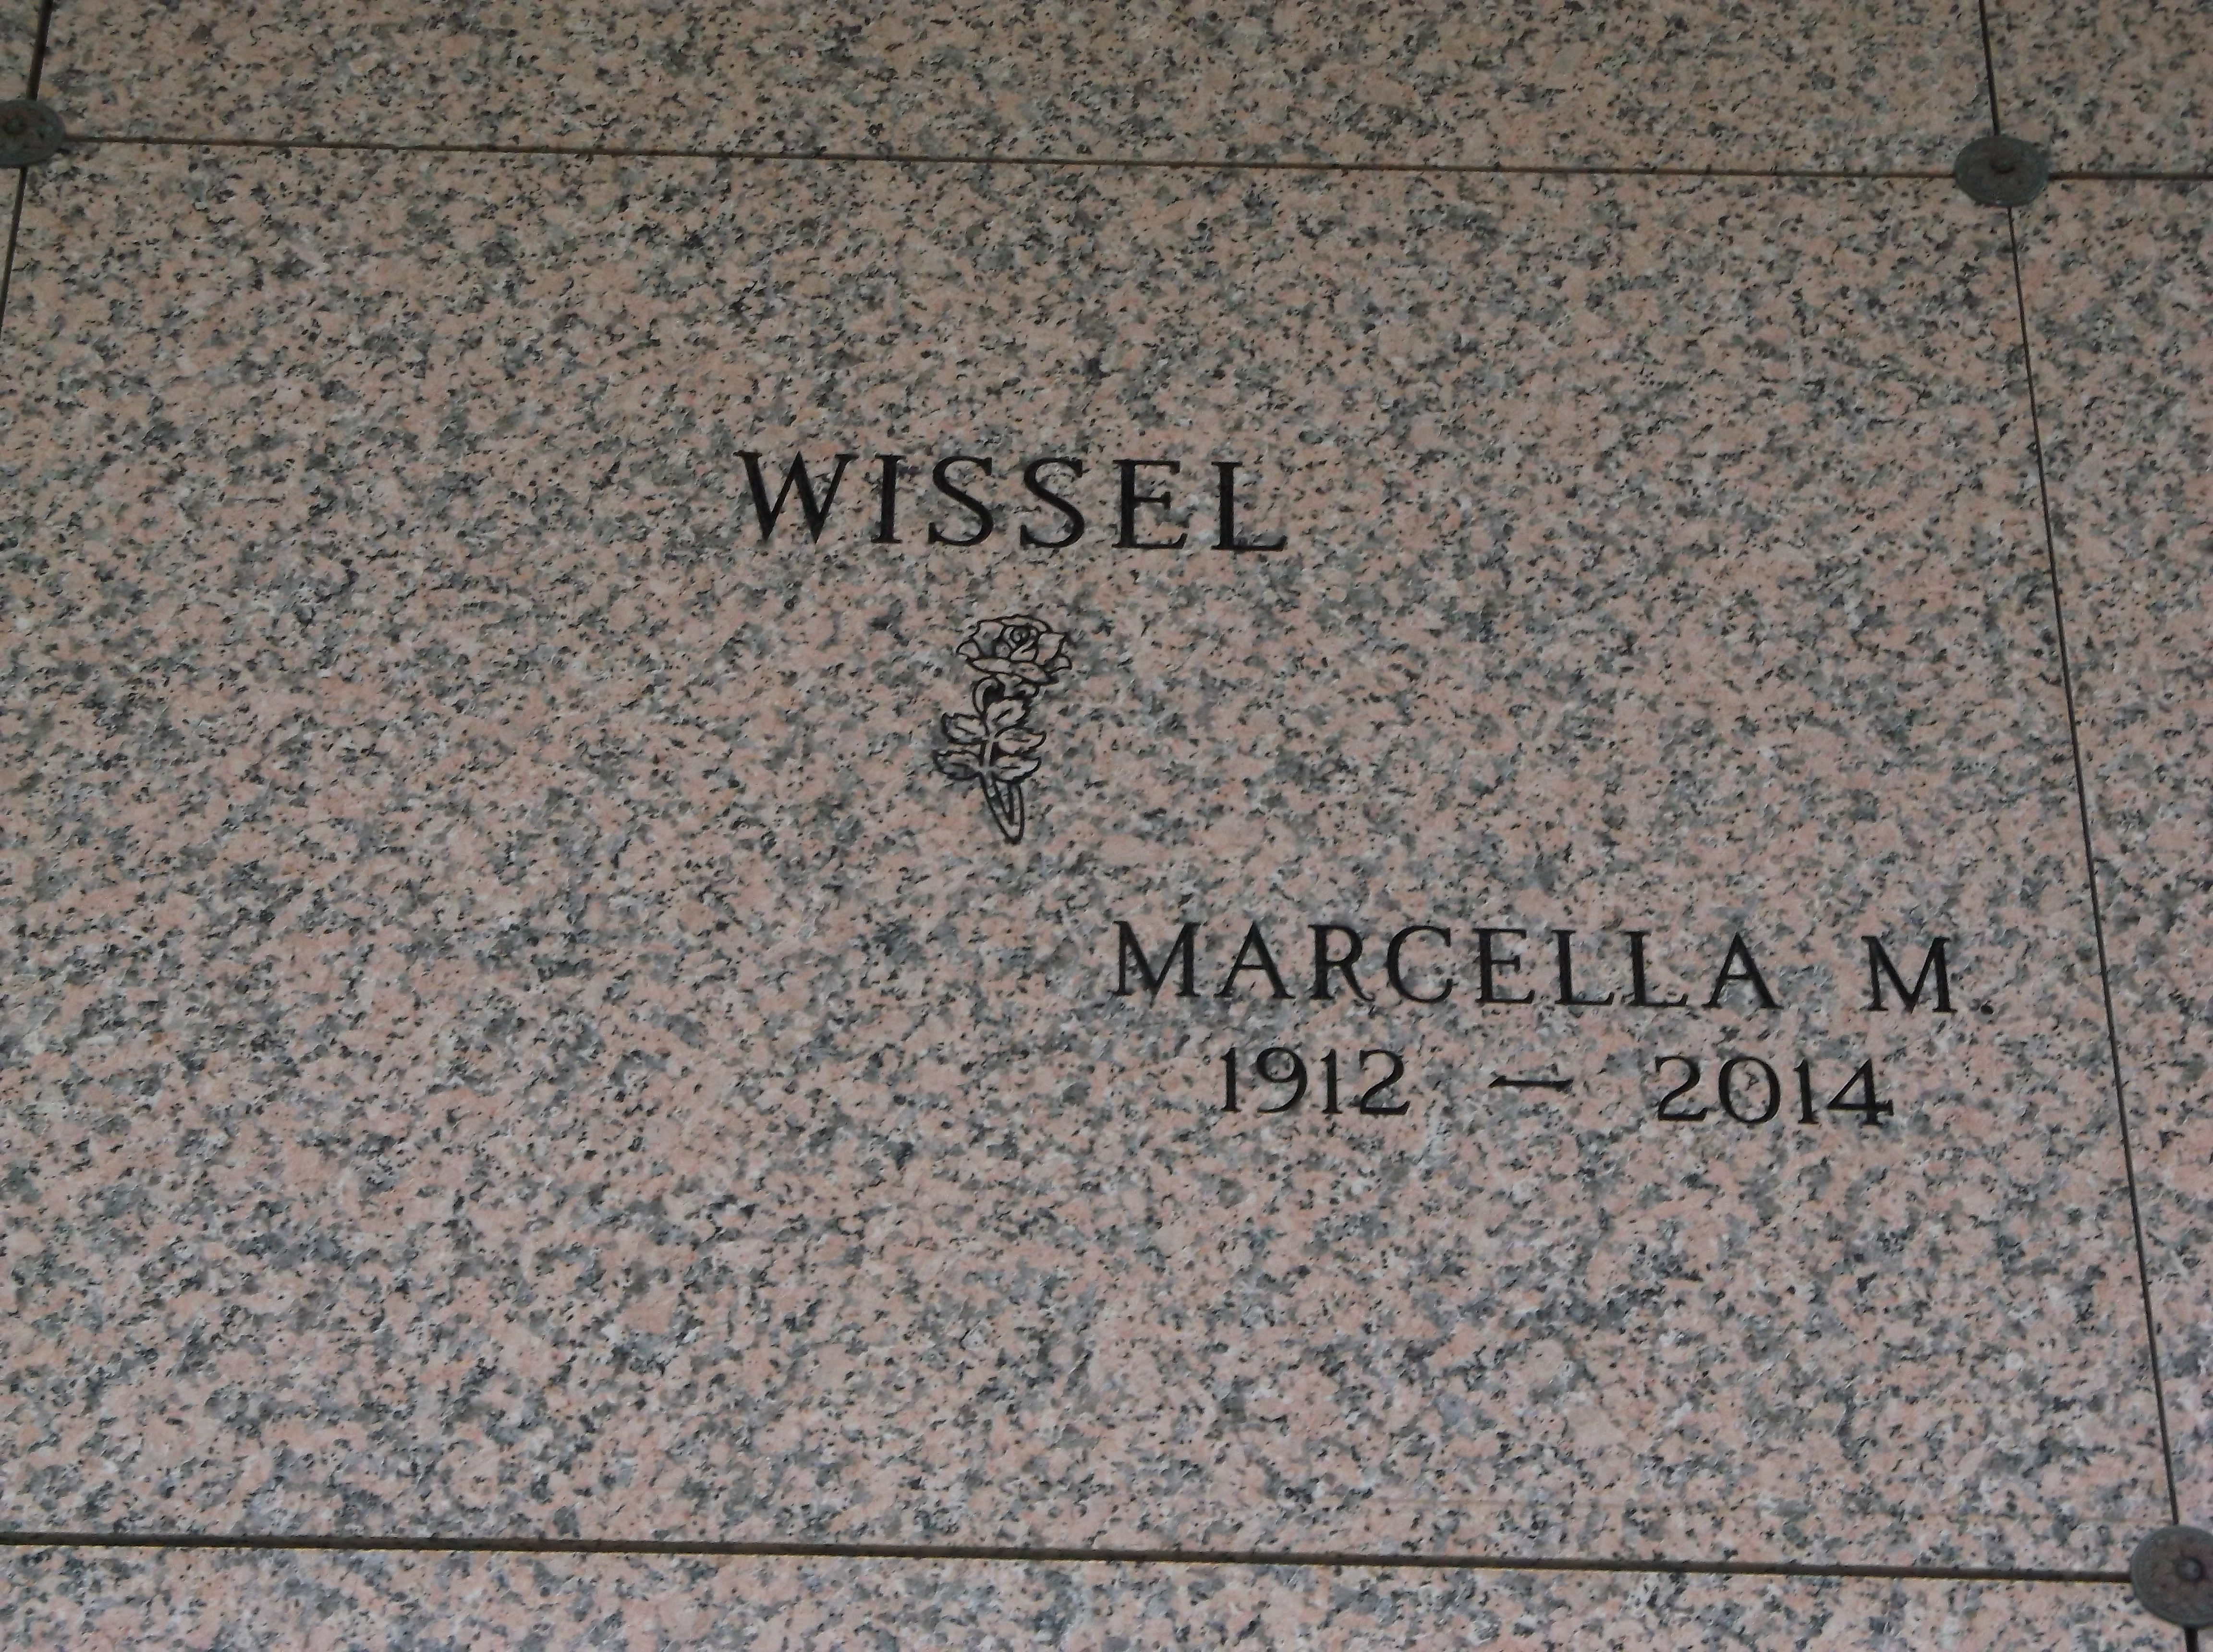 Marcella M Wissel